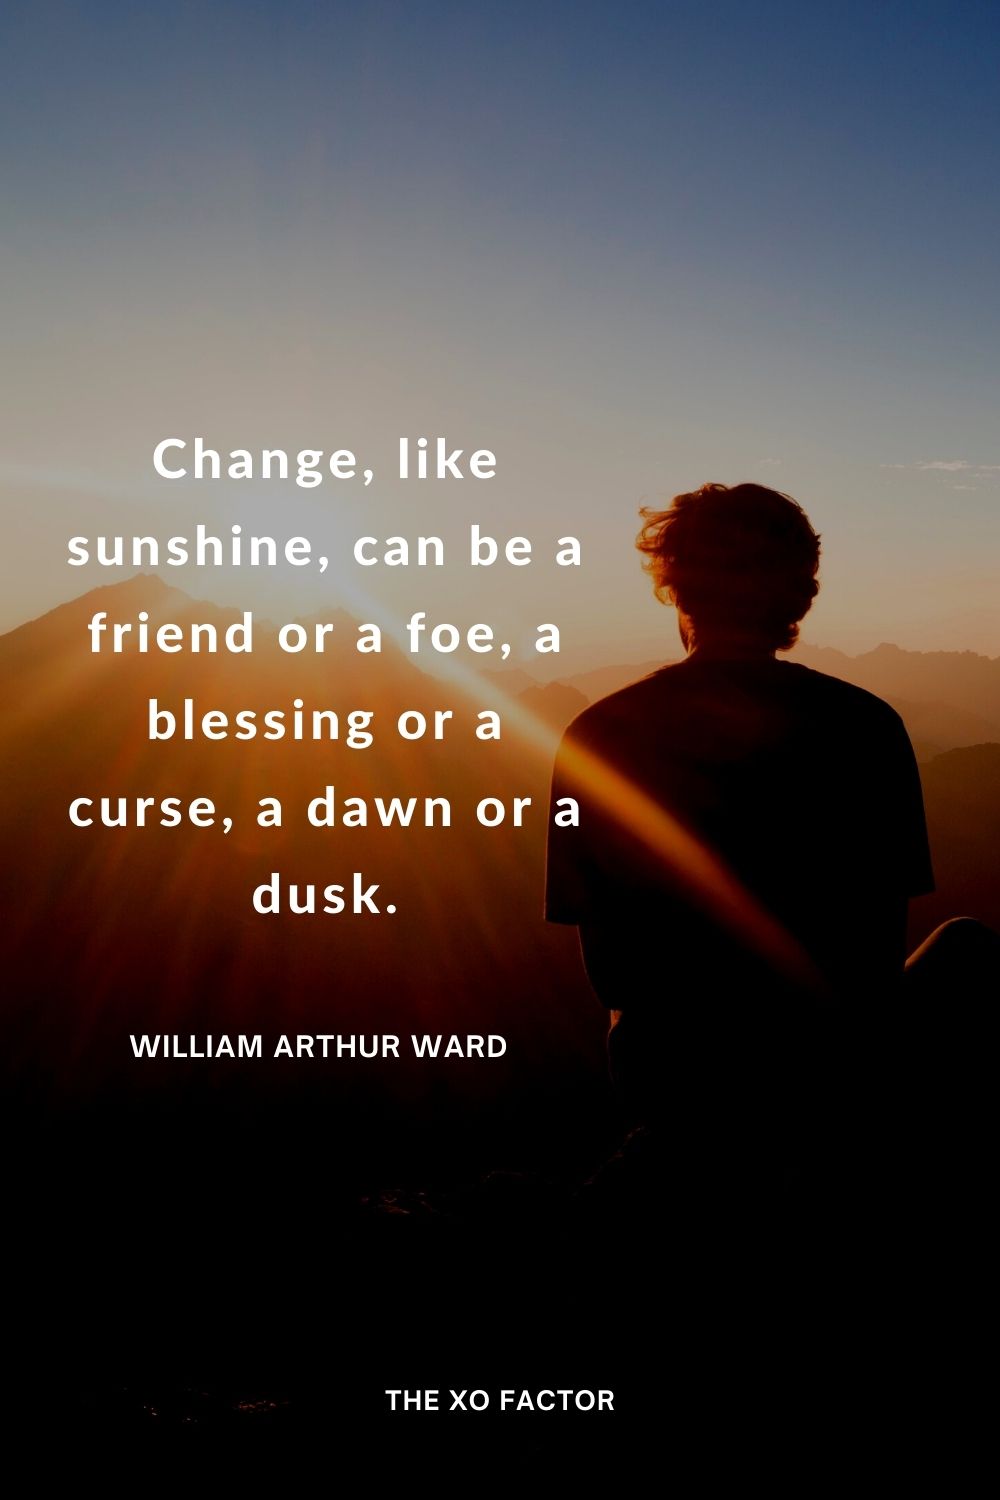 Change, like sunshine, can be a friend or a foe, a blessing or a curse, a dawn or a dusk.